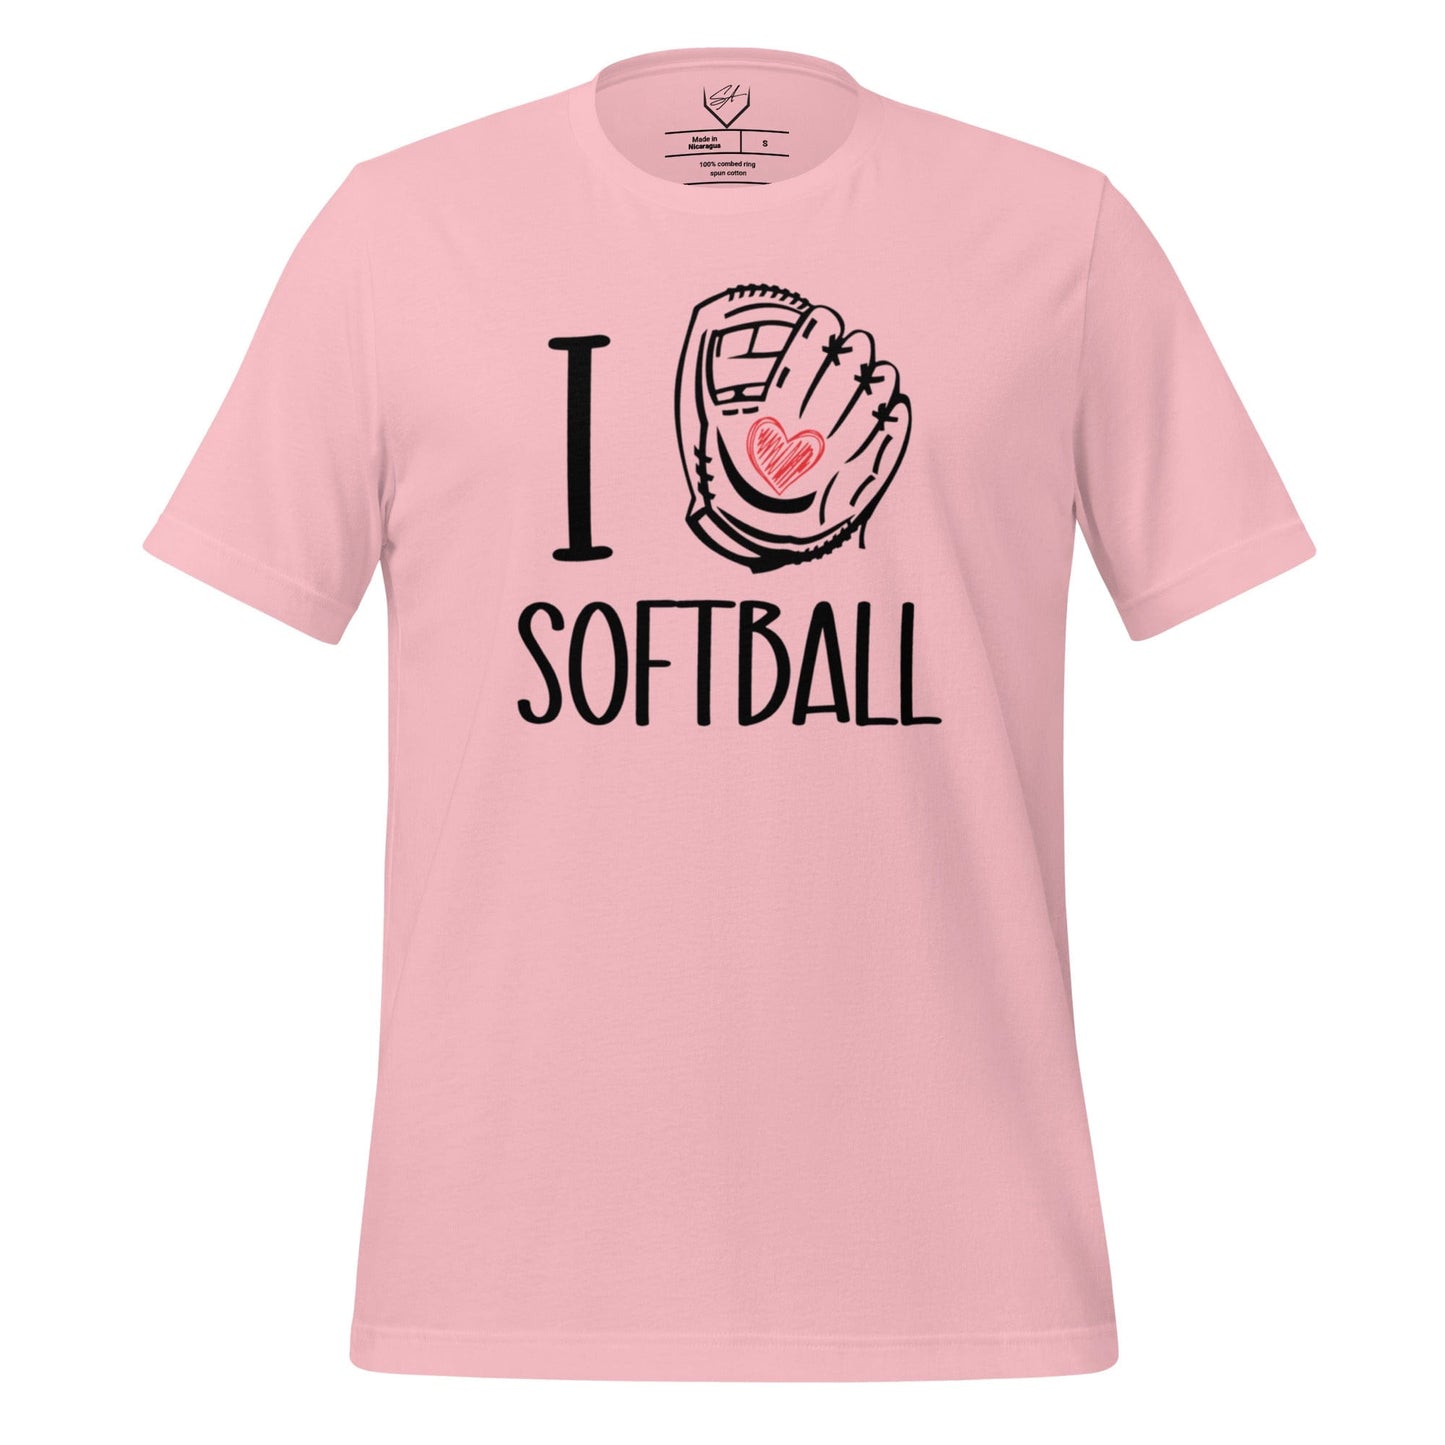 I Glove Softball - Adult Tee